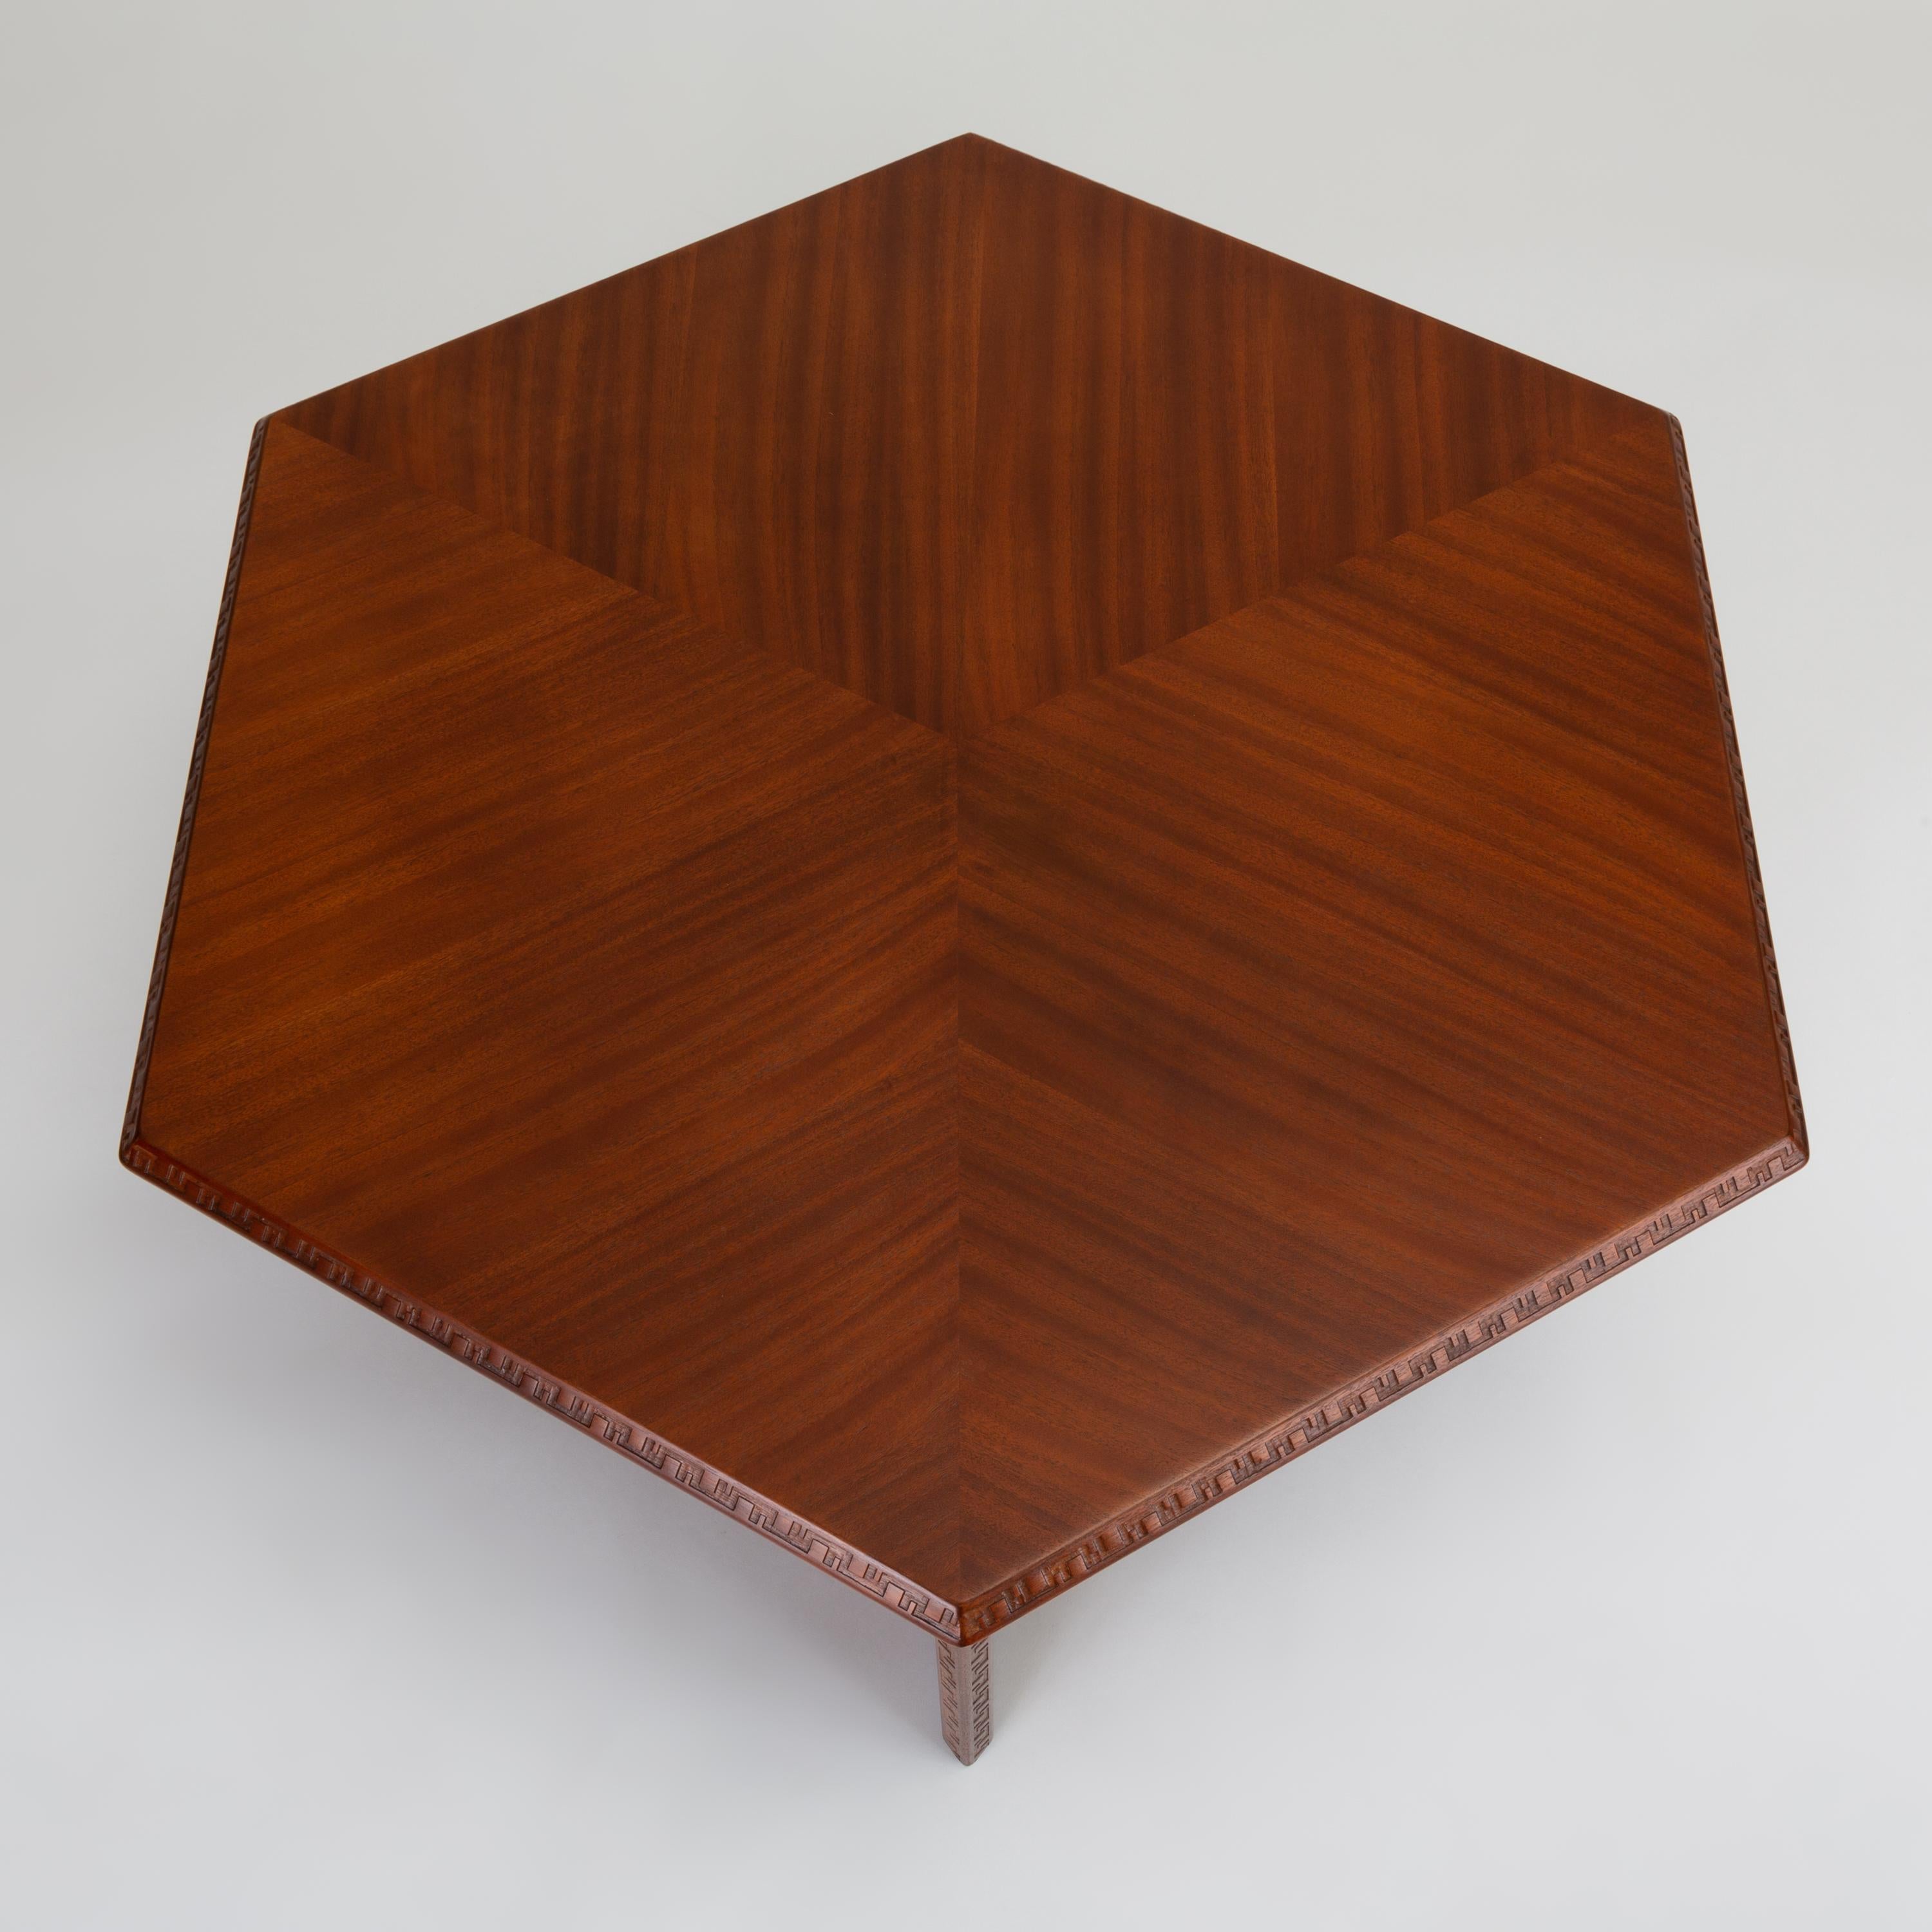 Frank Lloyd Wright “Taliesin” Coffee Table for Heritage-Henredon (amerikanisch)